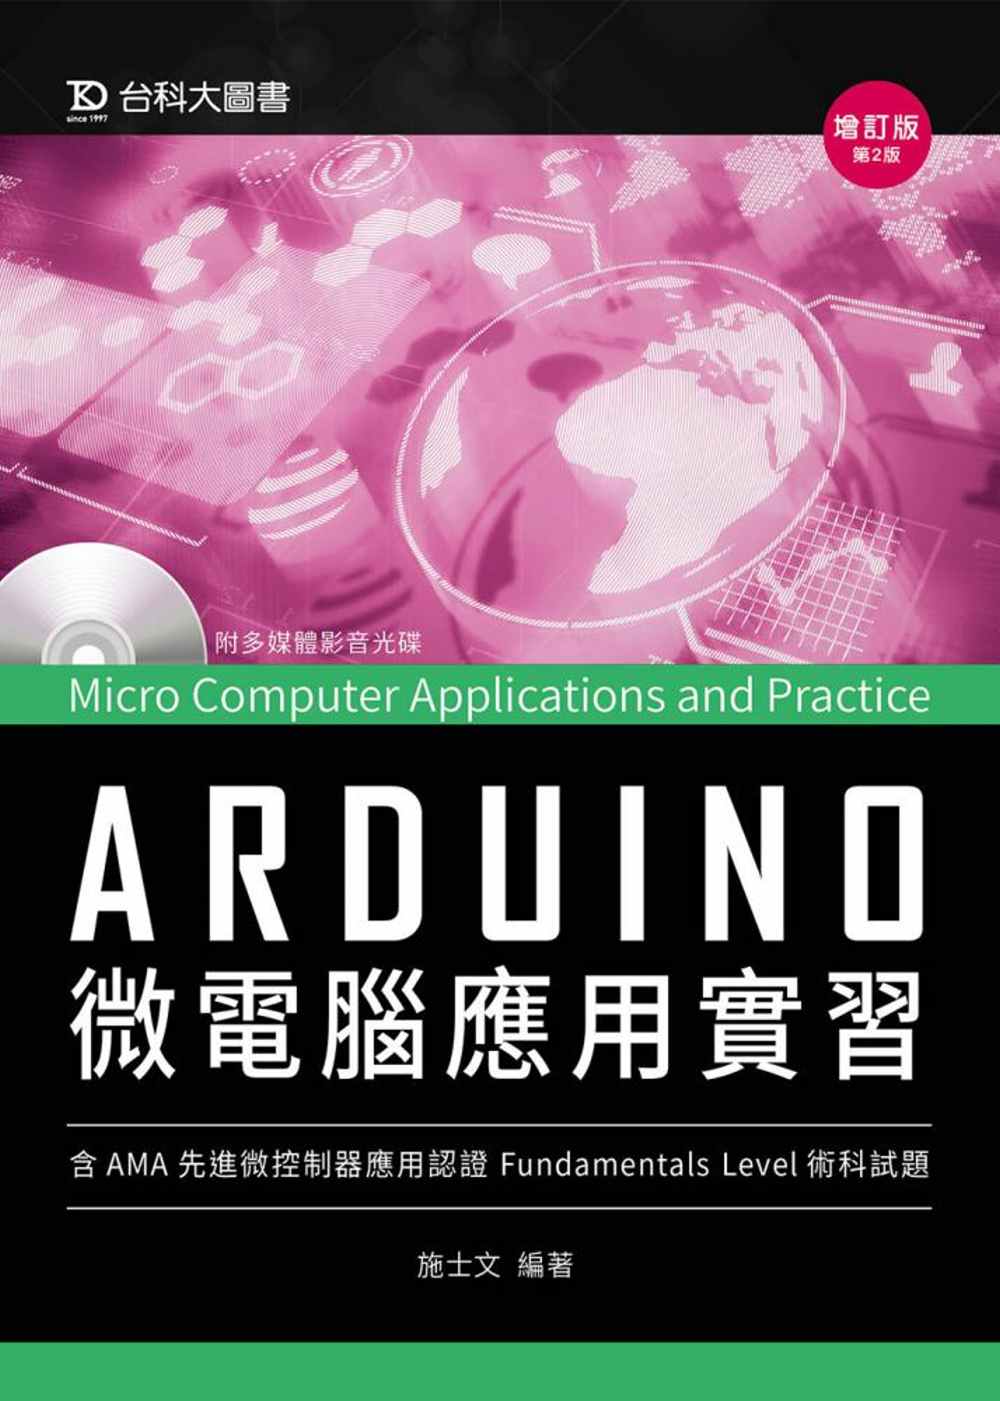 Arduino微電腦應用實習(含AMA中級先進微控制器應用認證術科試題) - 增訂版(第二版)